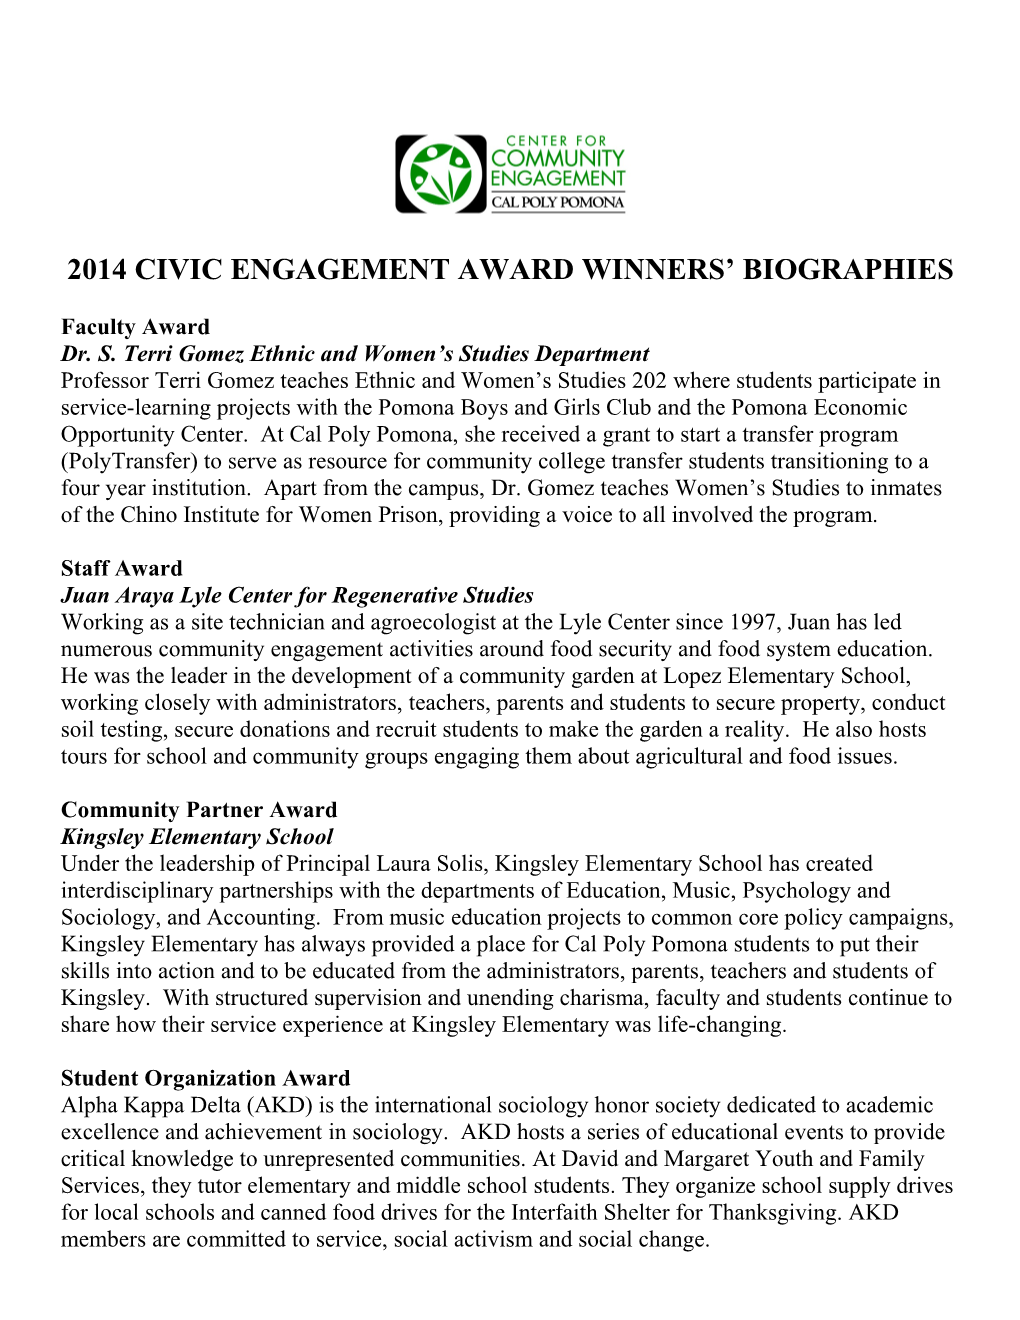 2014 Civic Engagement Award Winners Biographies